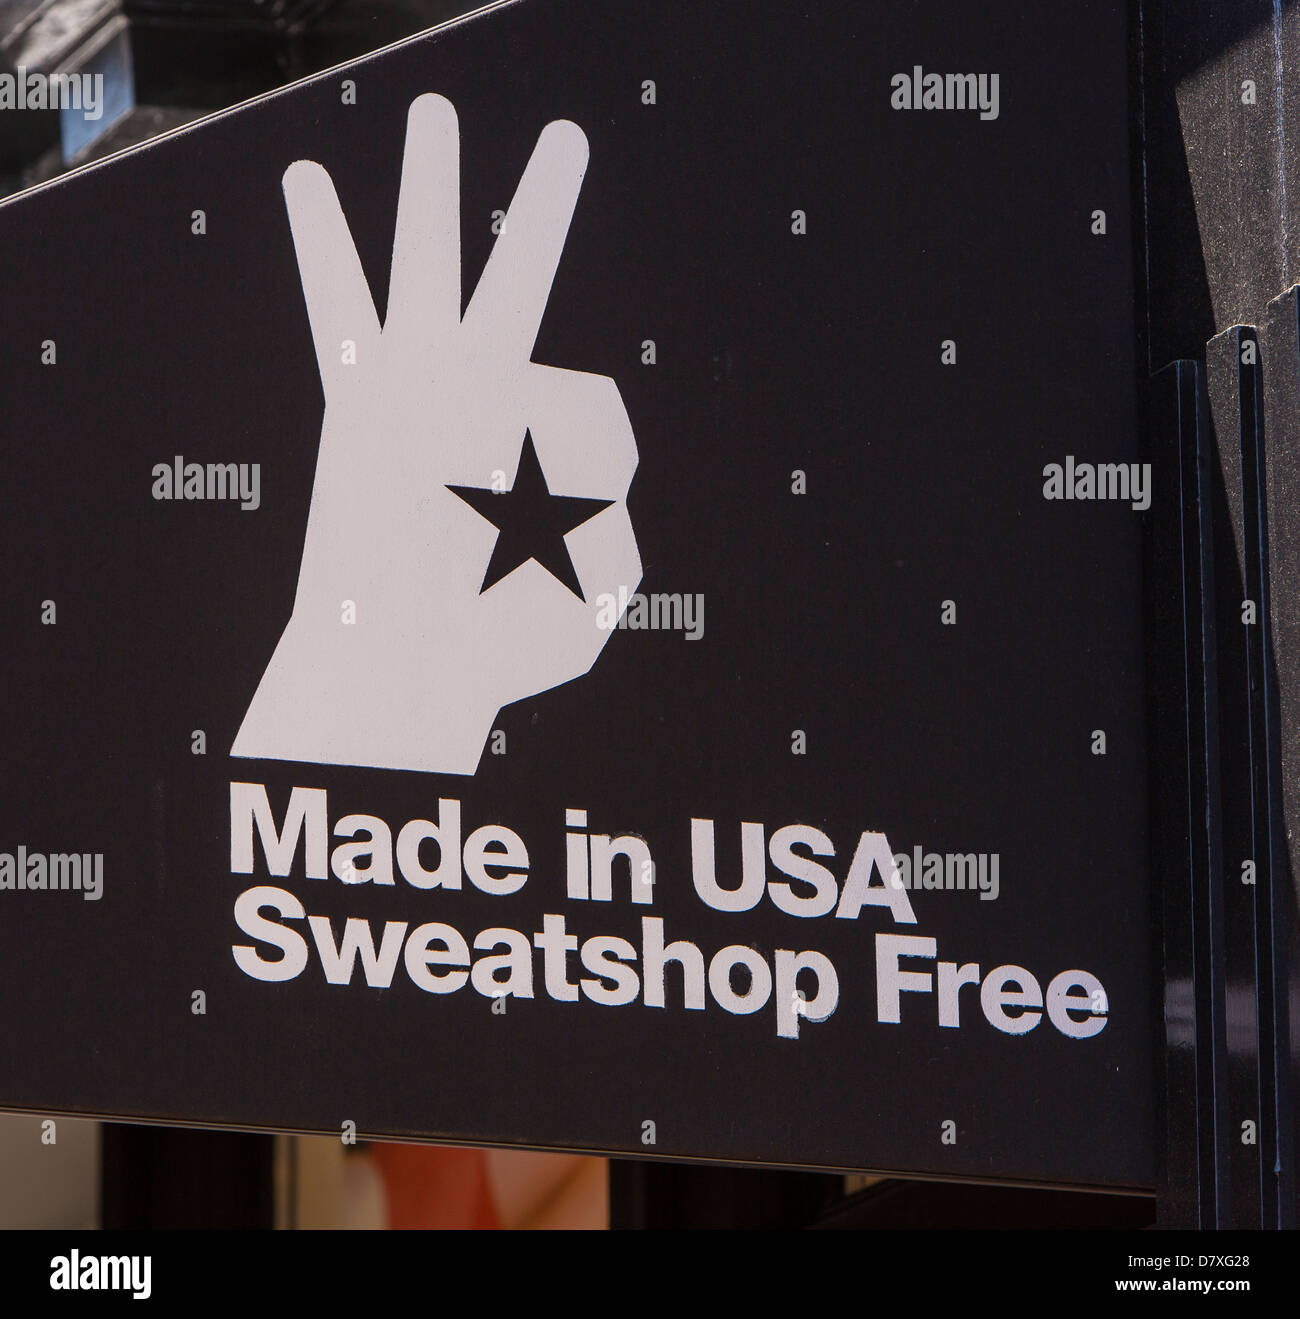 WASHINGTON, DC, USA - Made in USA Sweatshop Free sign at store on M Street in Georgetown neighborhood. Stock Photo